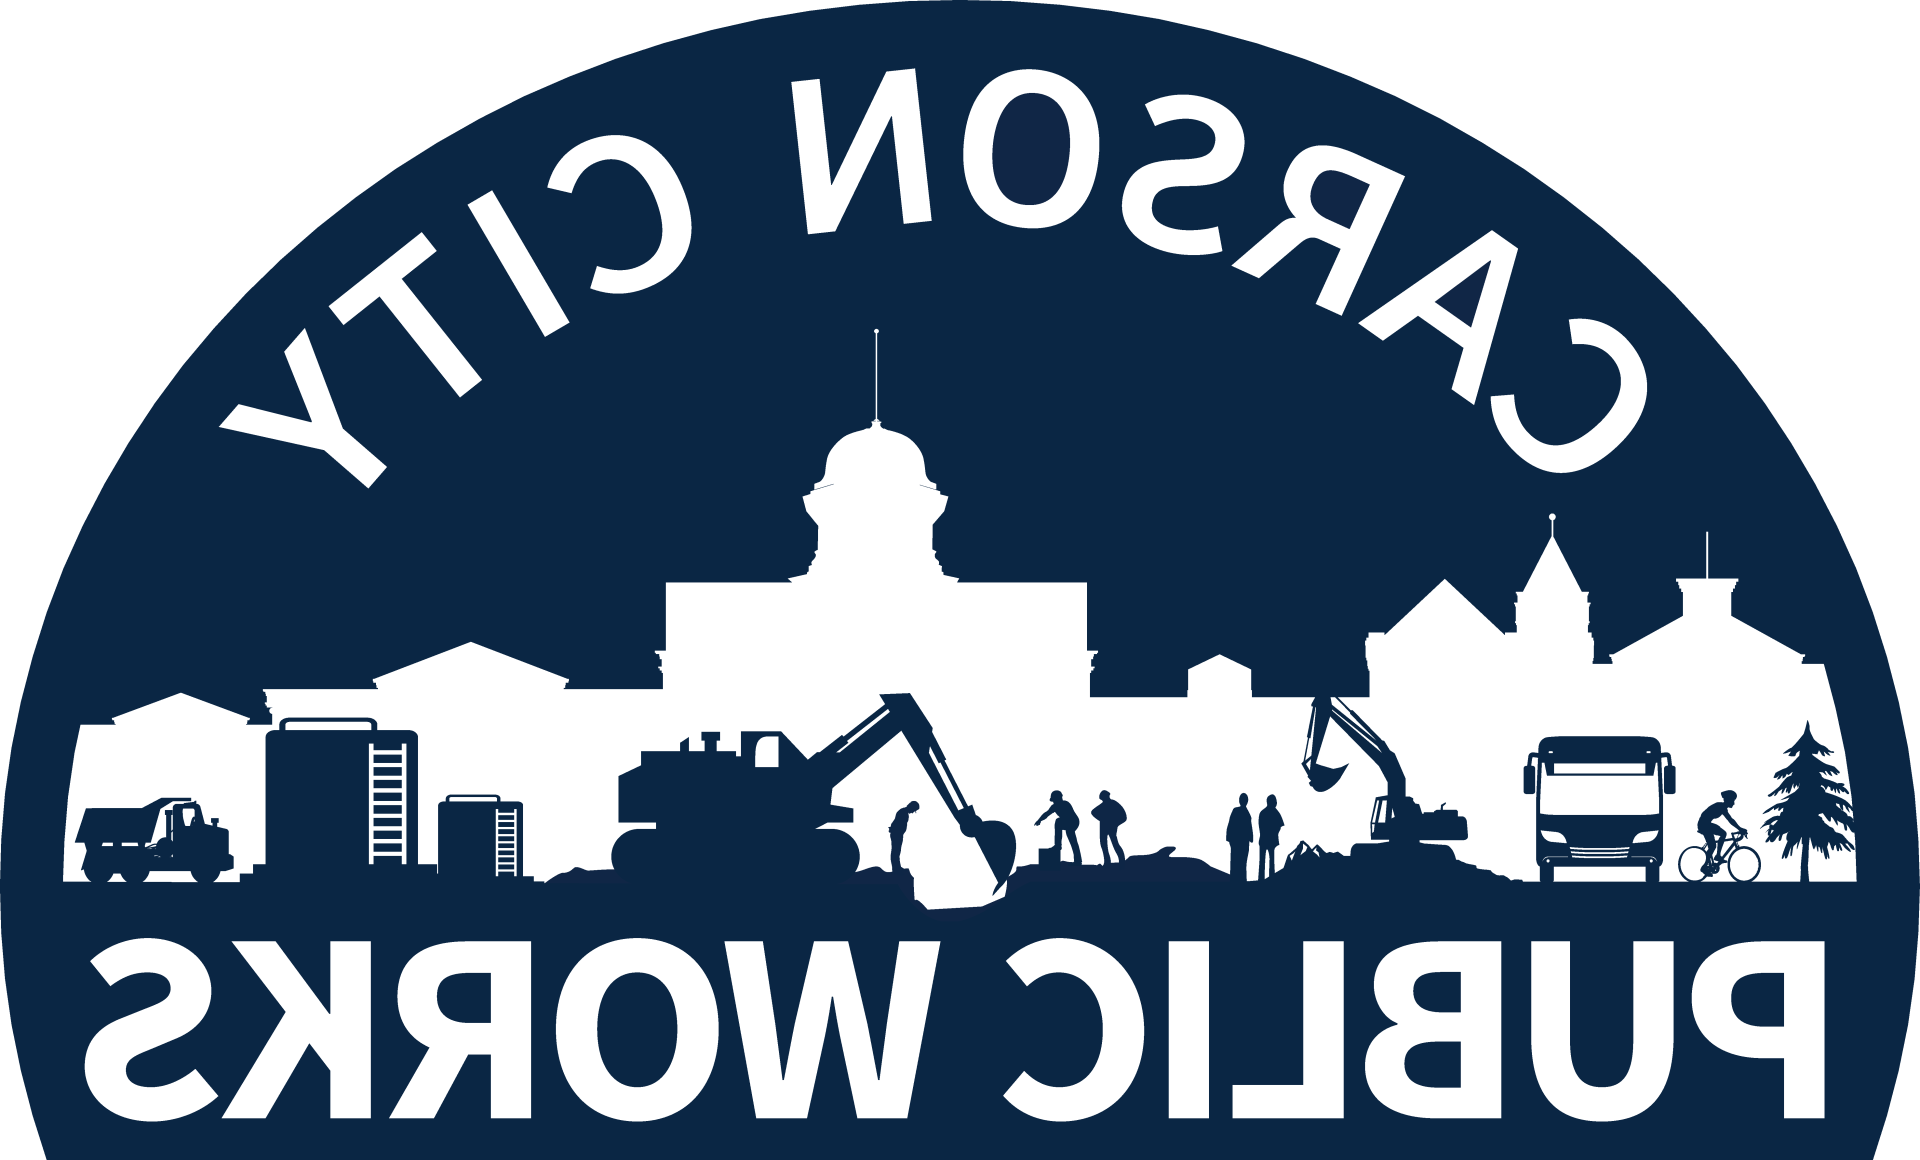 Carson City Public Works logo